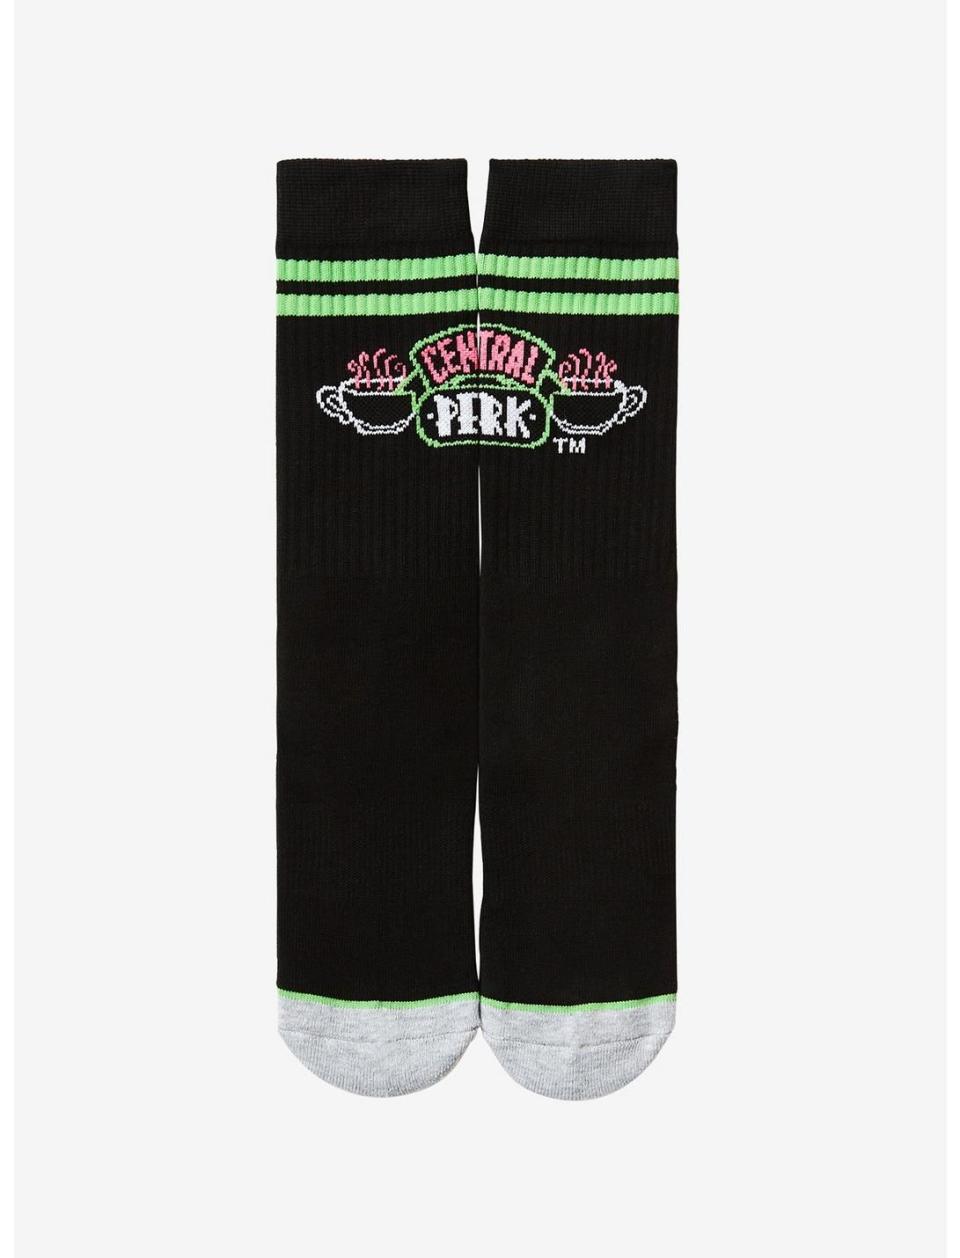 14) 'Friends' Central Perk Logo Crew Socks